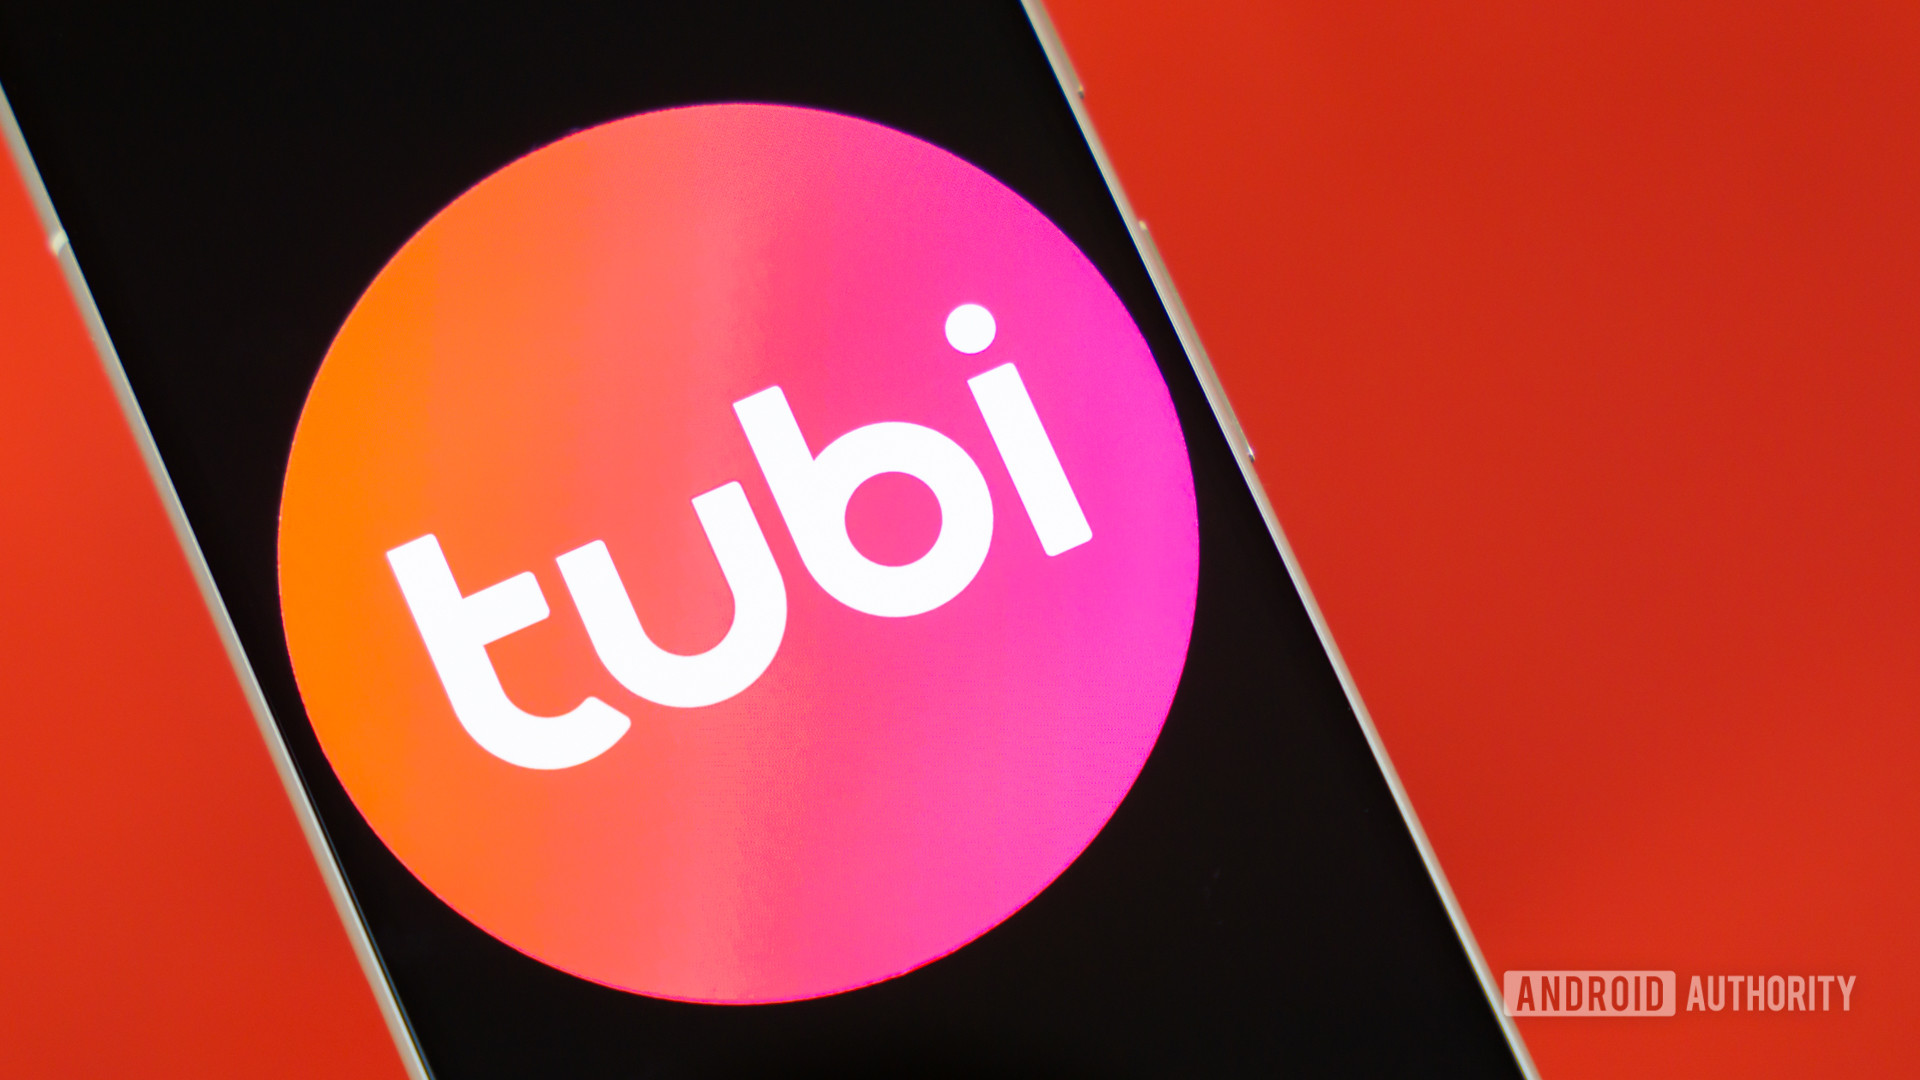 Stock photo of Tubi logo on phone 1